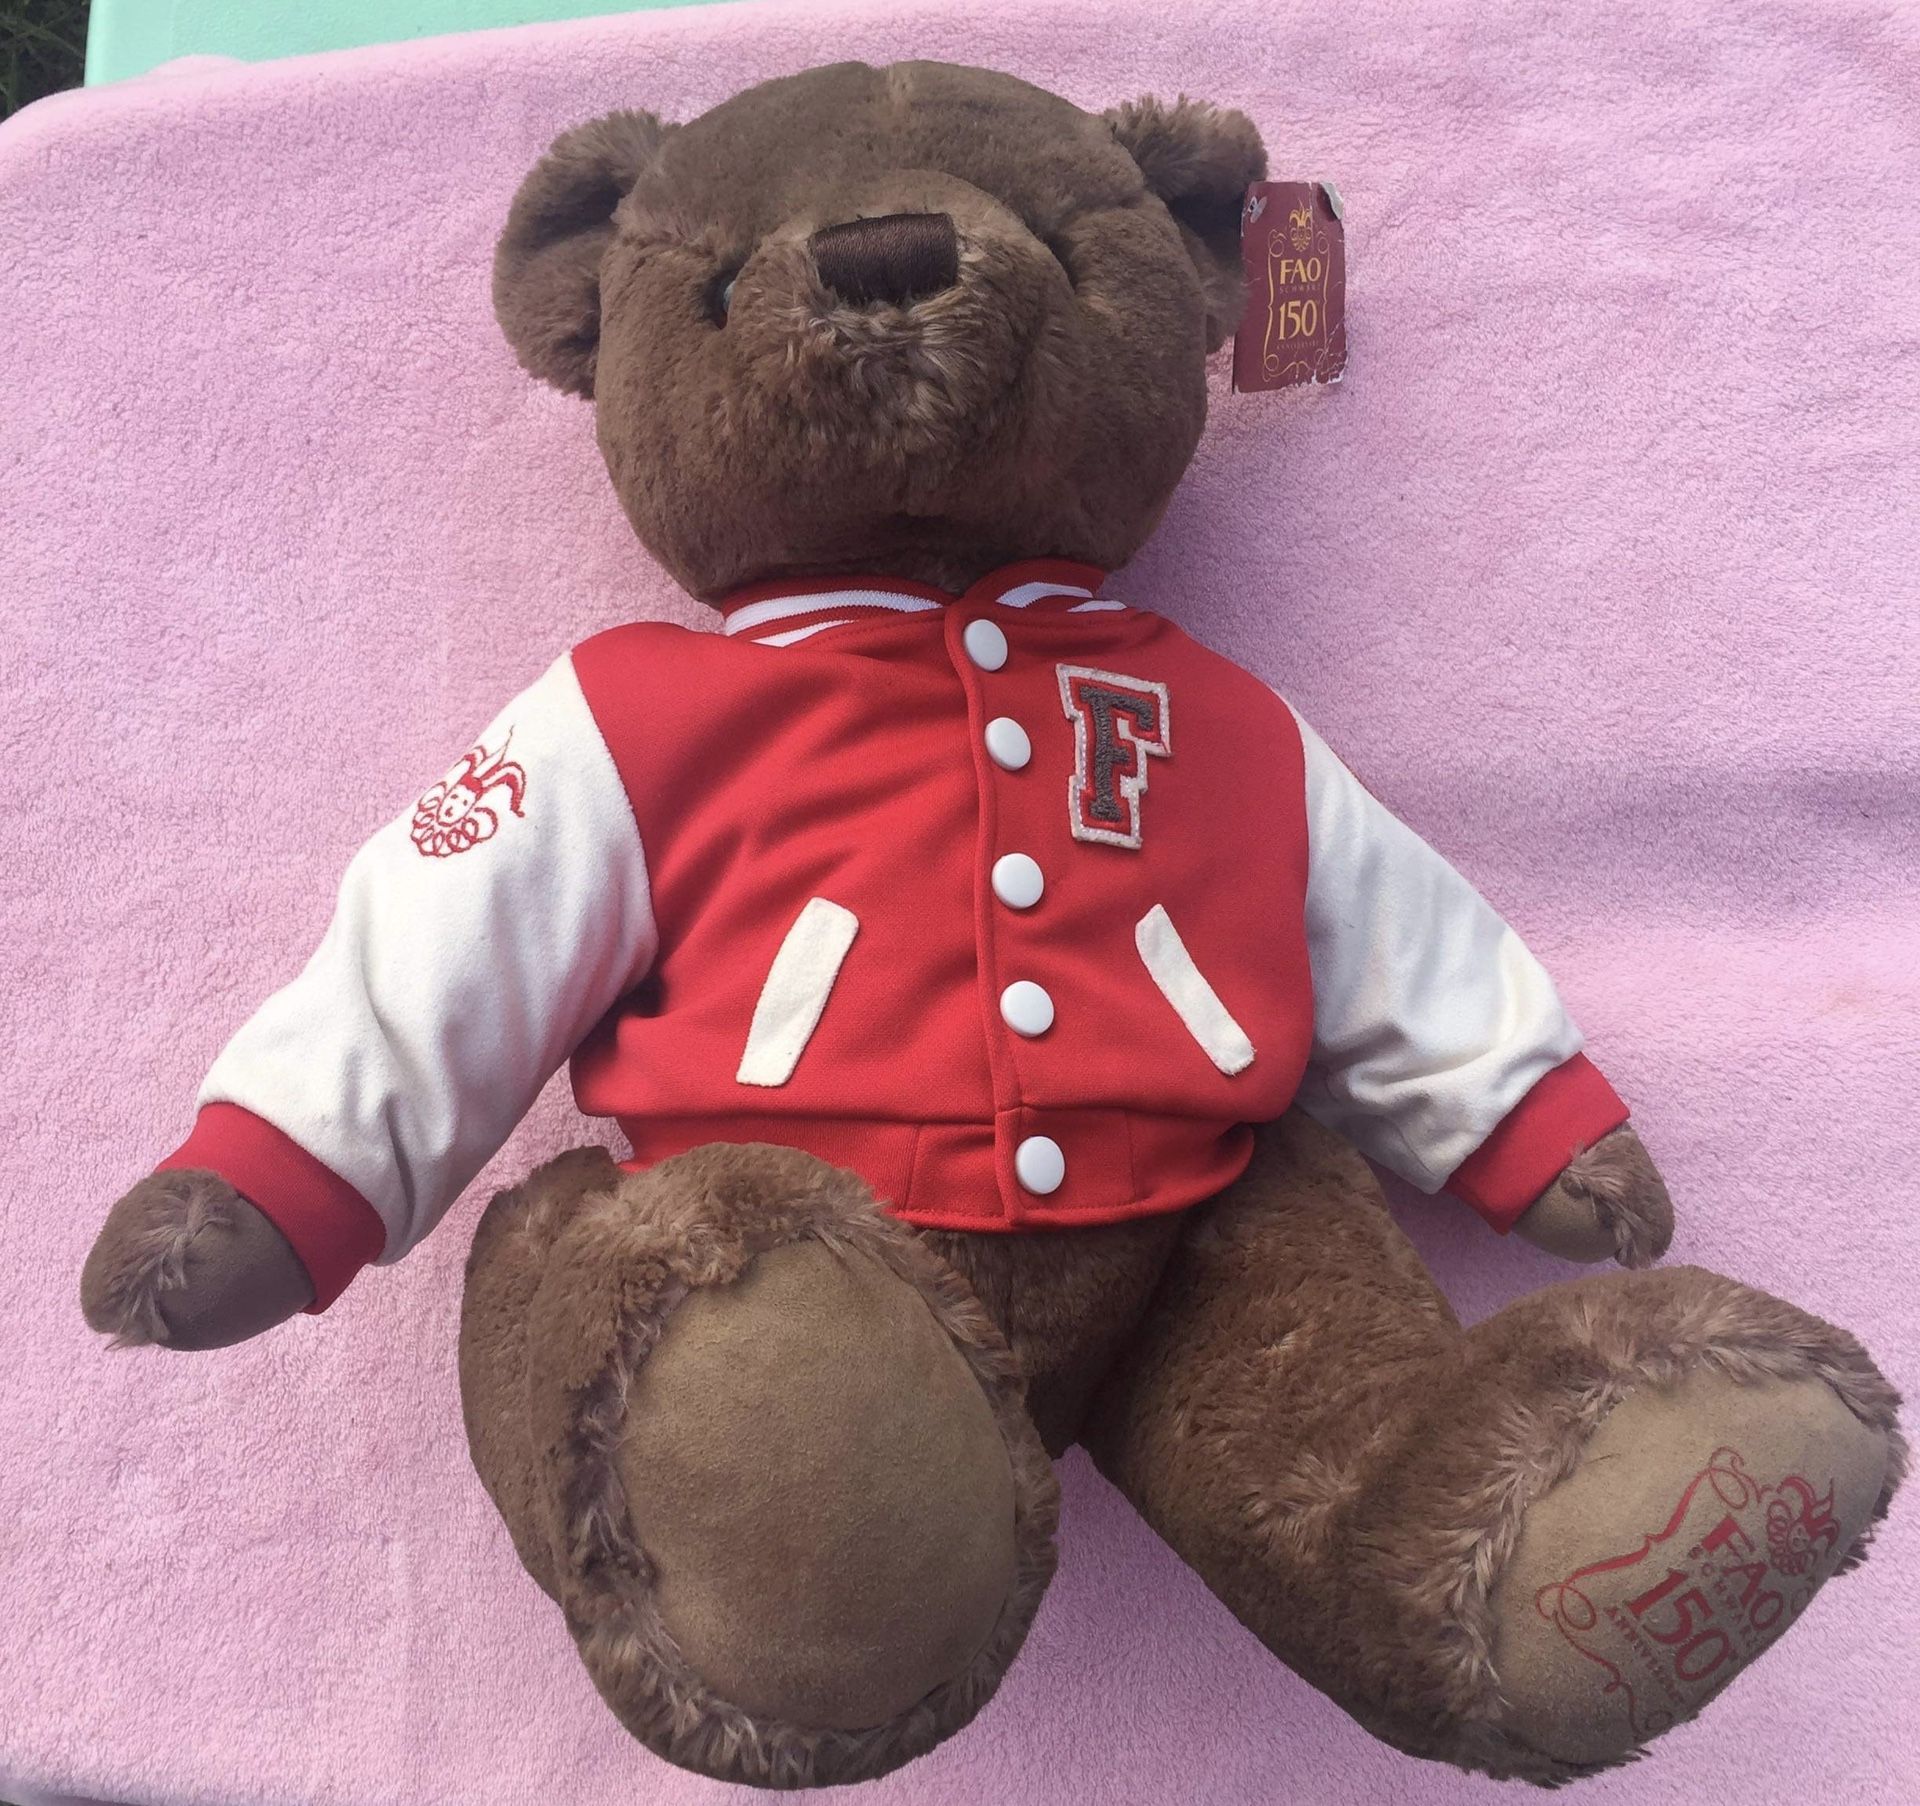 FAO Schwarz Plush Bear Wearing Varsity Jacket 150th Anniversary Teddy 13" Tall